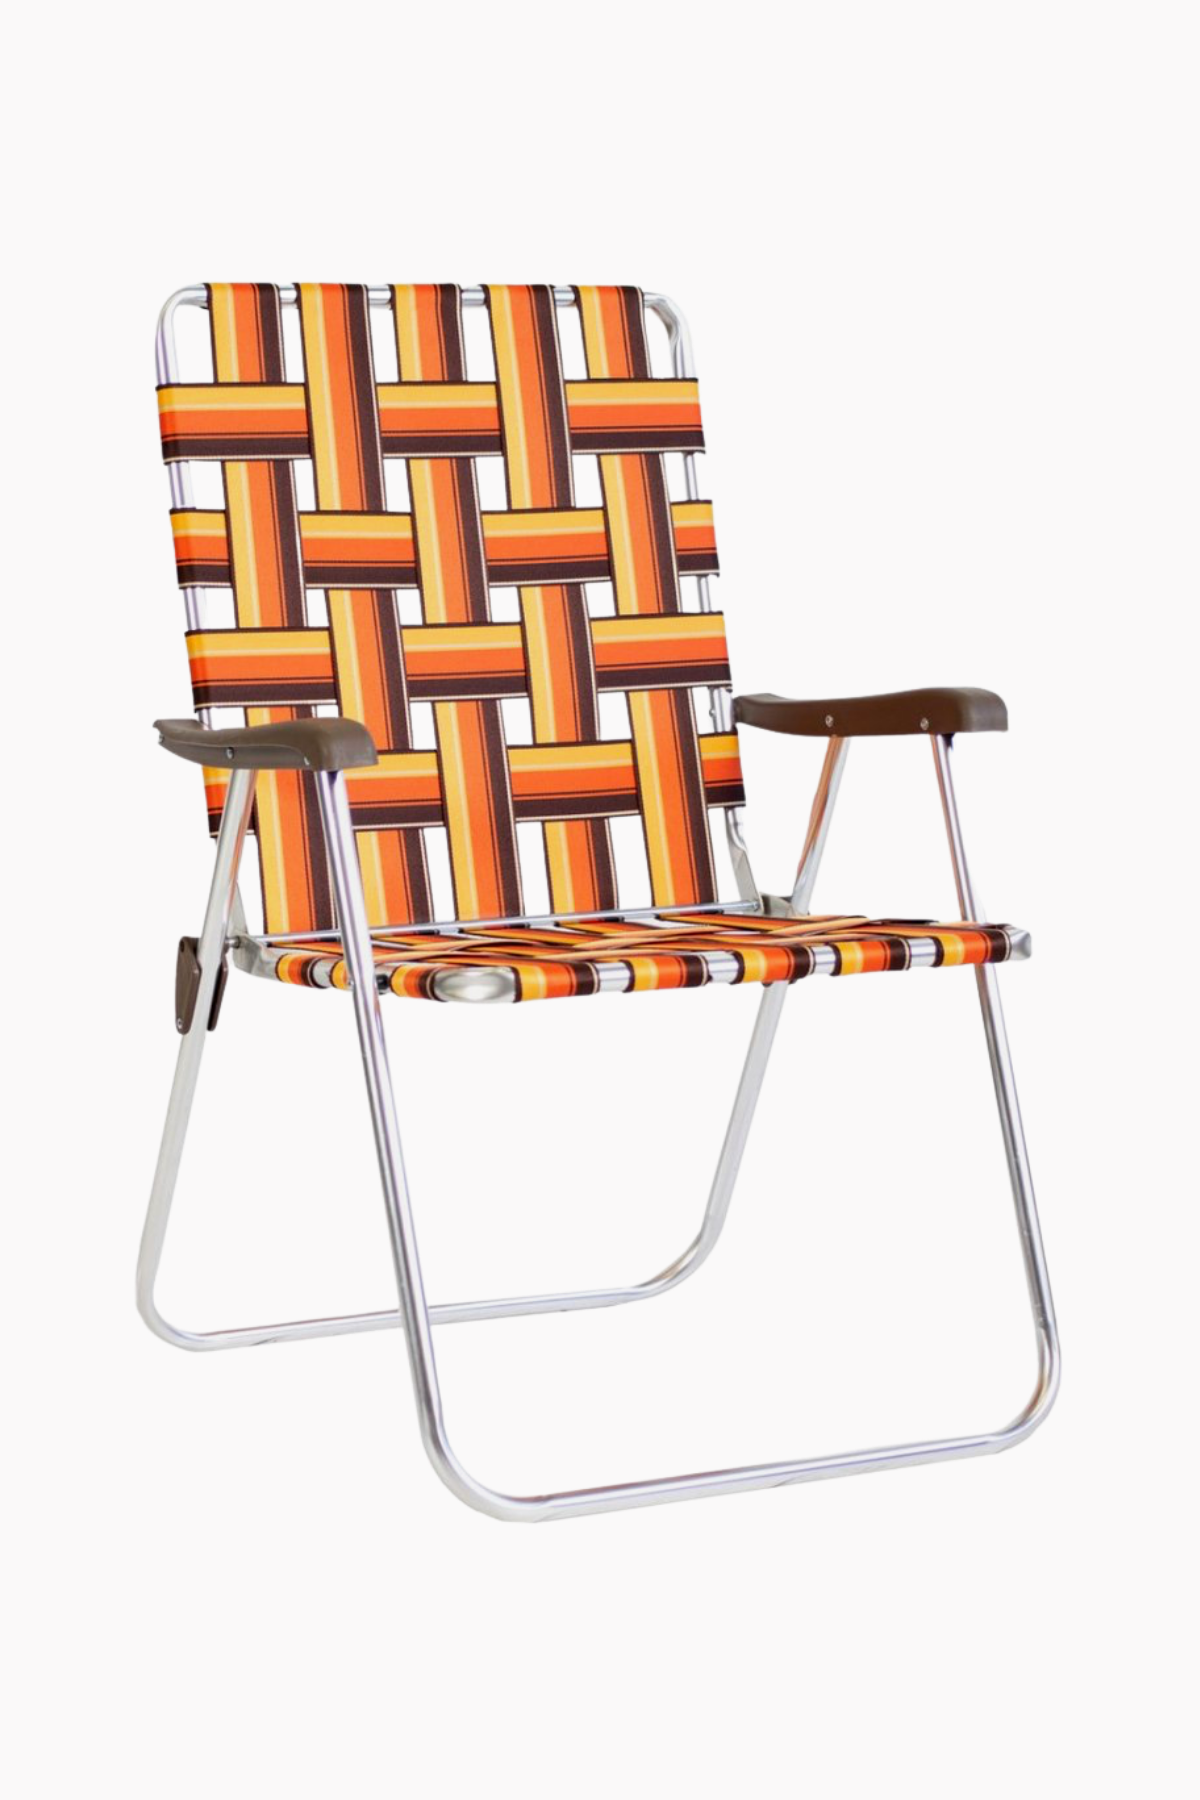 Kuma Backtrack Orange/Brown Chair - Cottage Toys Canada